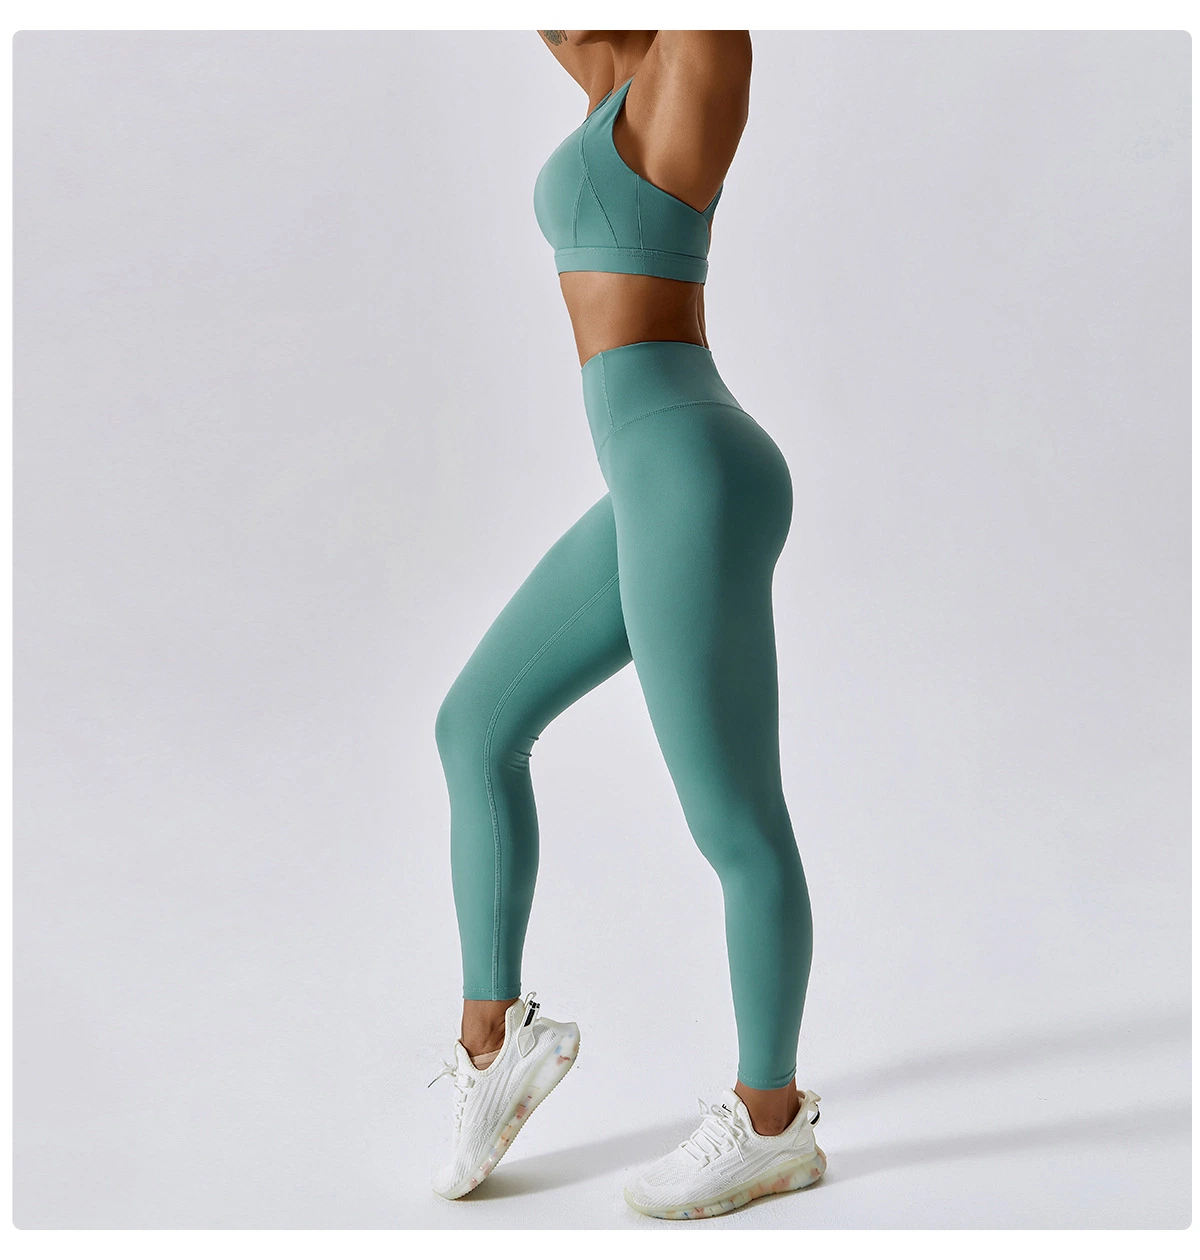 Djmc Women Sport Bra Top Solid Color Breathable Gym Leggings Fitness Workout Yoga Set for Women Sportswear